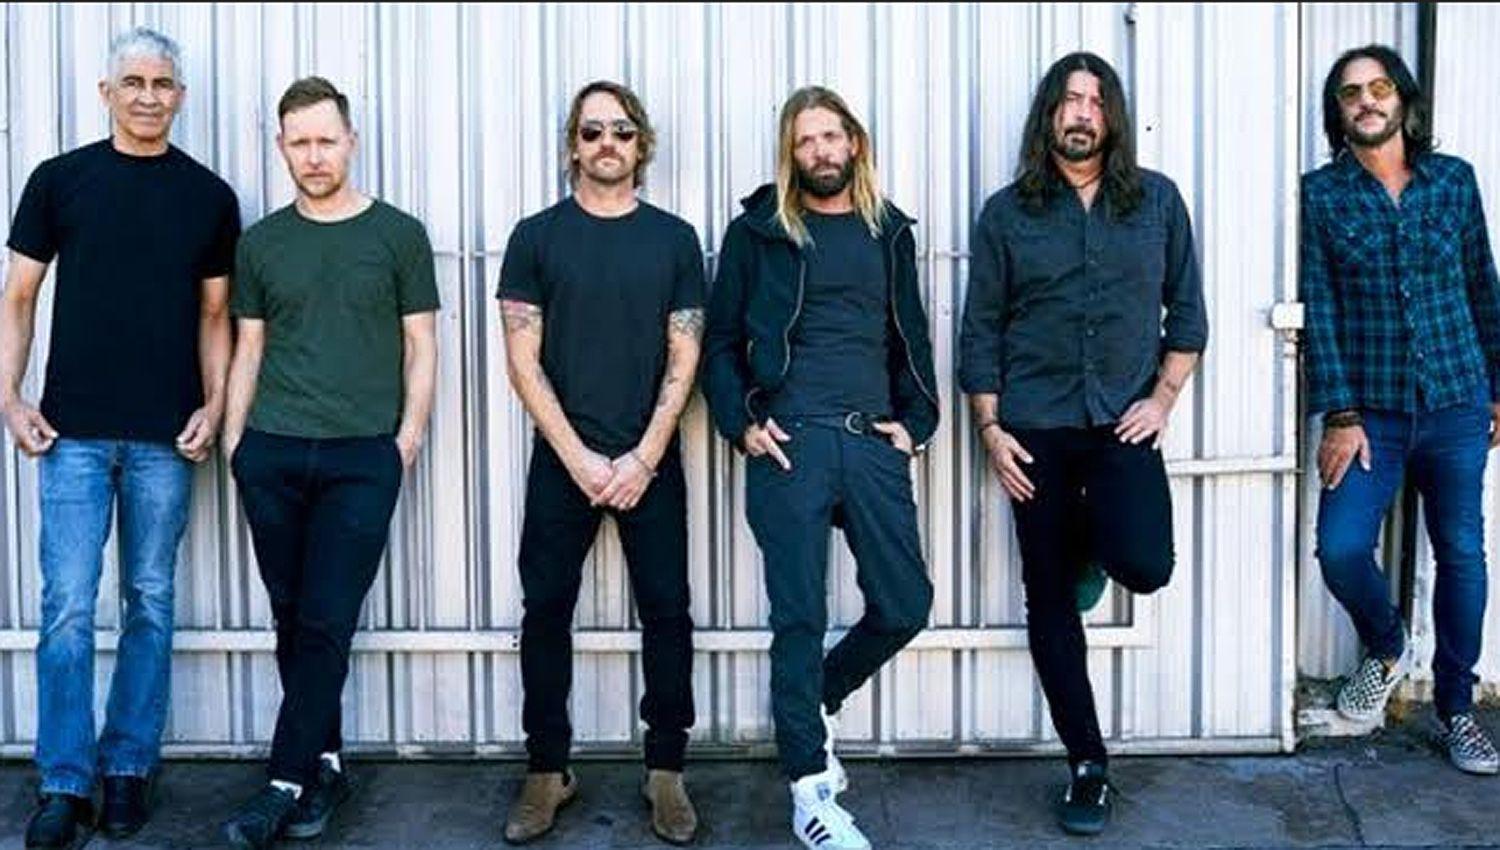 VIDEO  Foo Fighters lanzoacute Waiting on a War tercer adelanto de ldquoMedicine at midnightrdquo